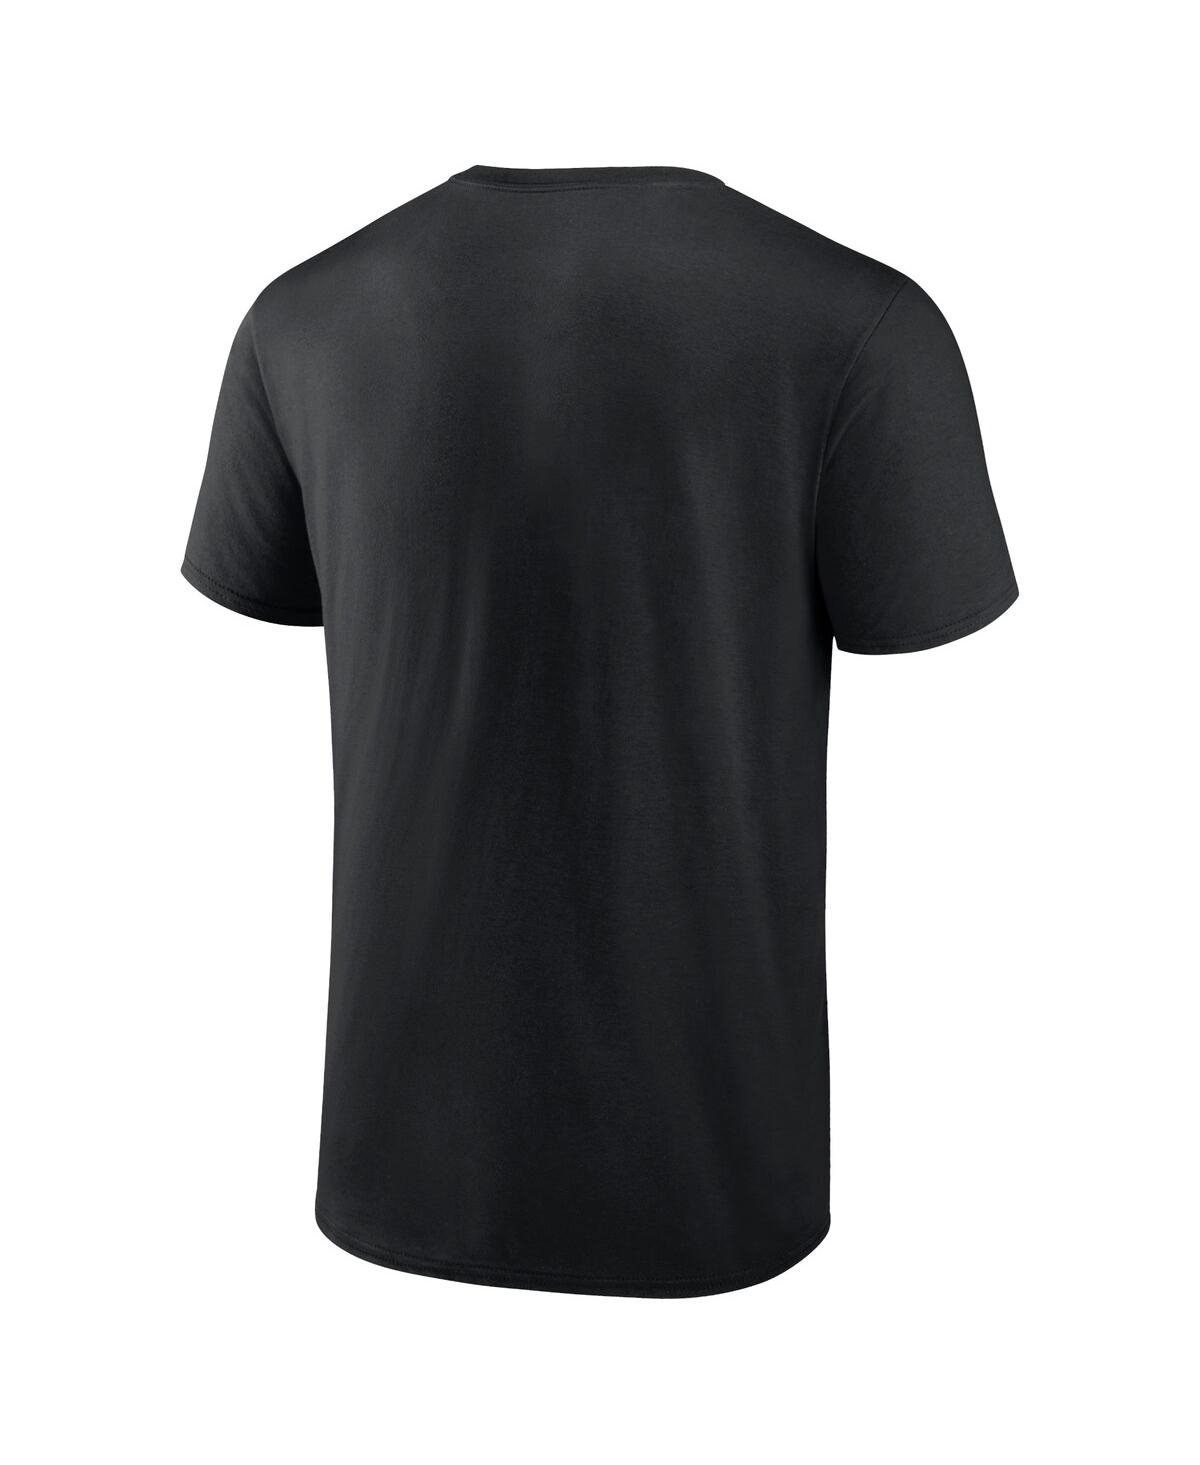 Shop Fanatics Men's  Black Charlotte Fc Ultimate Highlight T-shirt